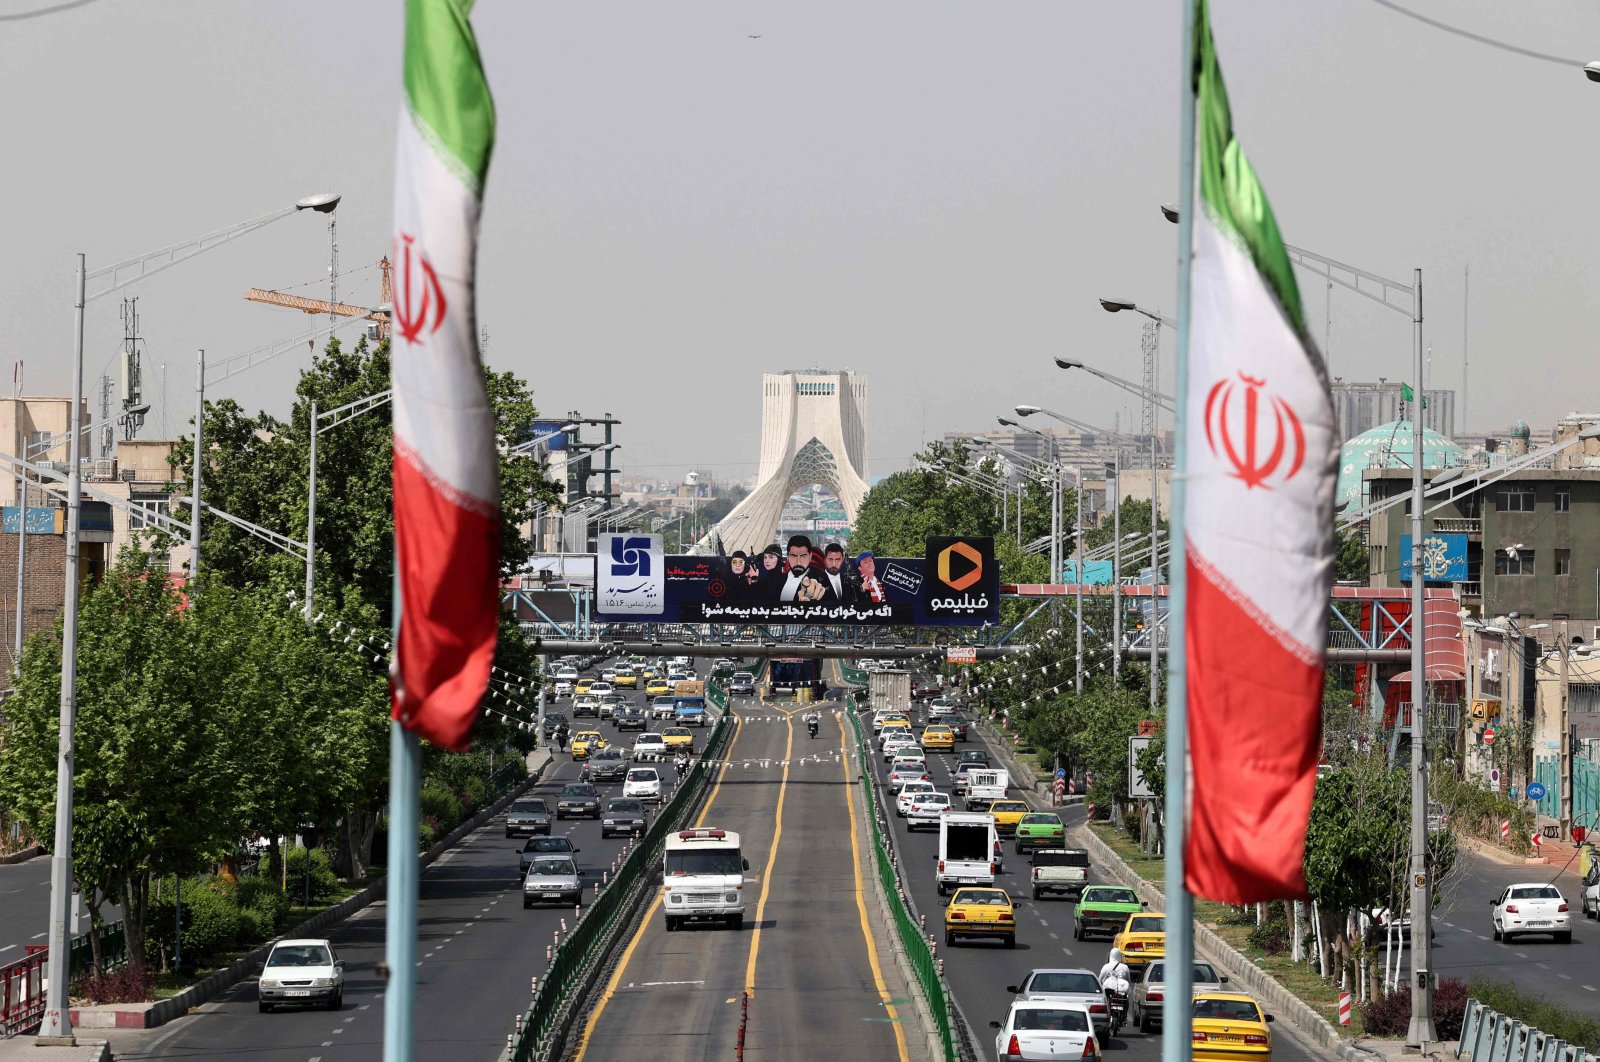 A view shows traffic on Azadi street in Iran's capital Tehran, April 20, 2021. (AFP)